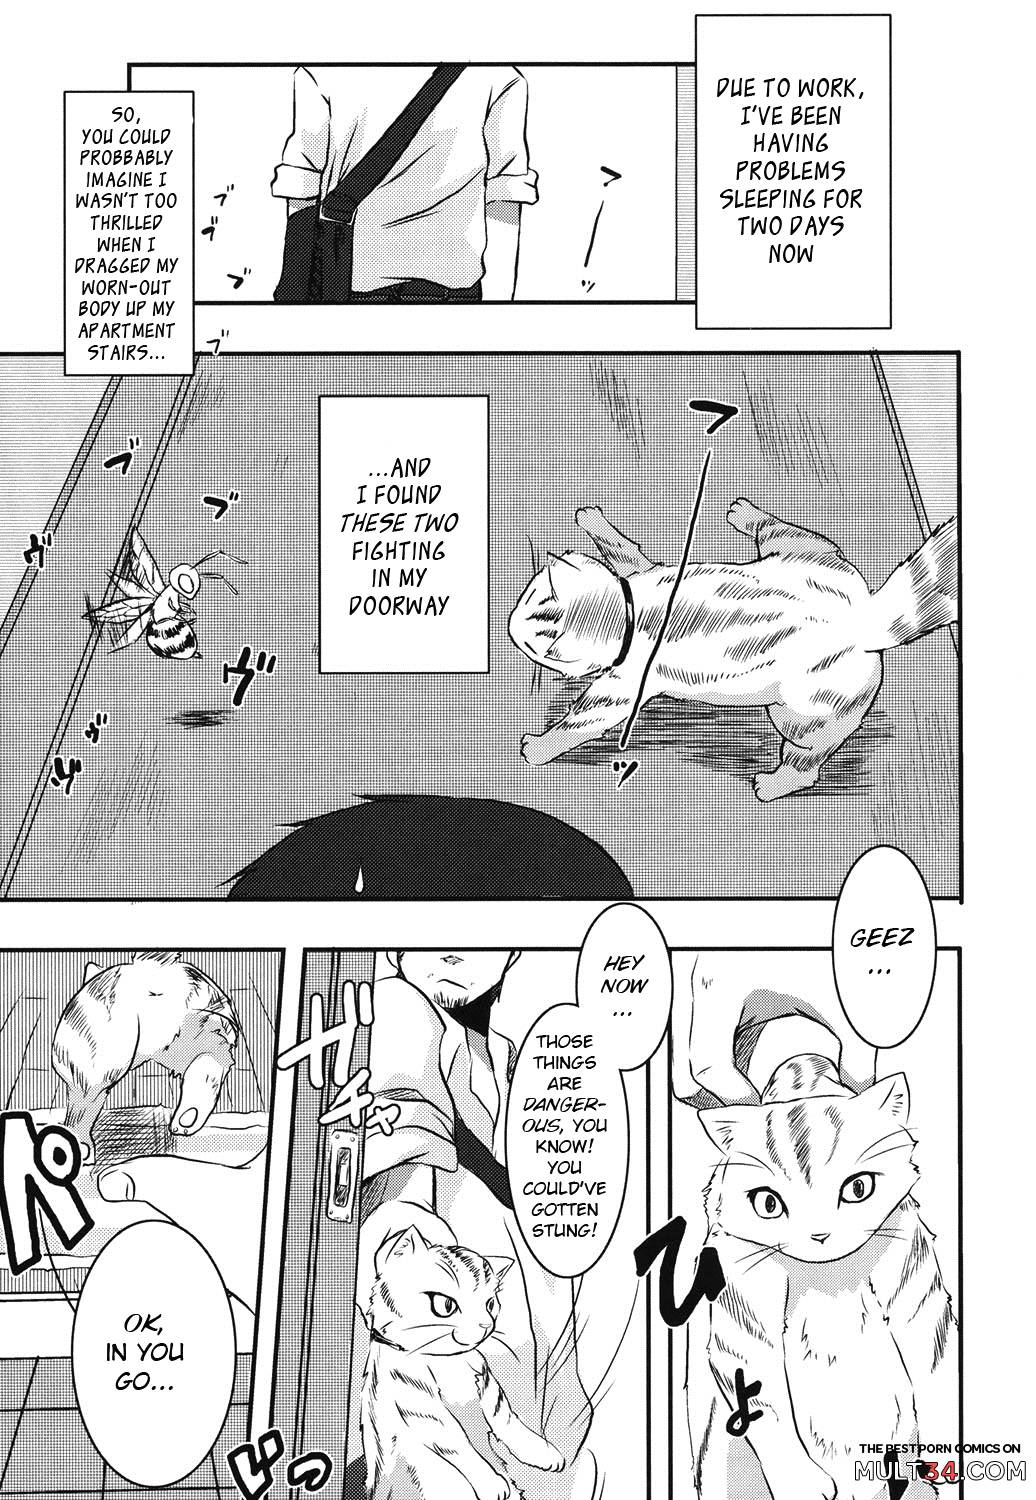 Hachihime-sama Chikuri page 1